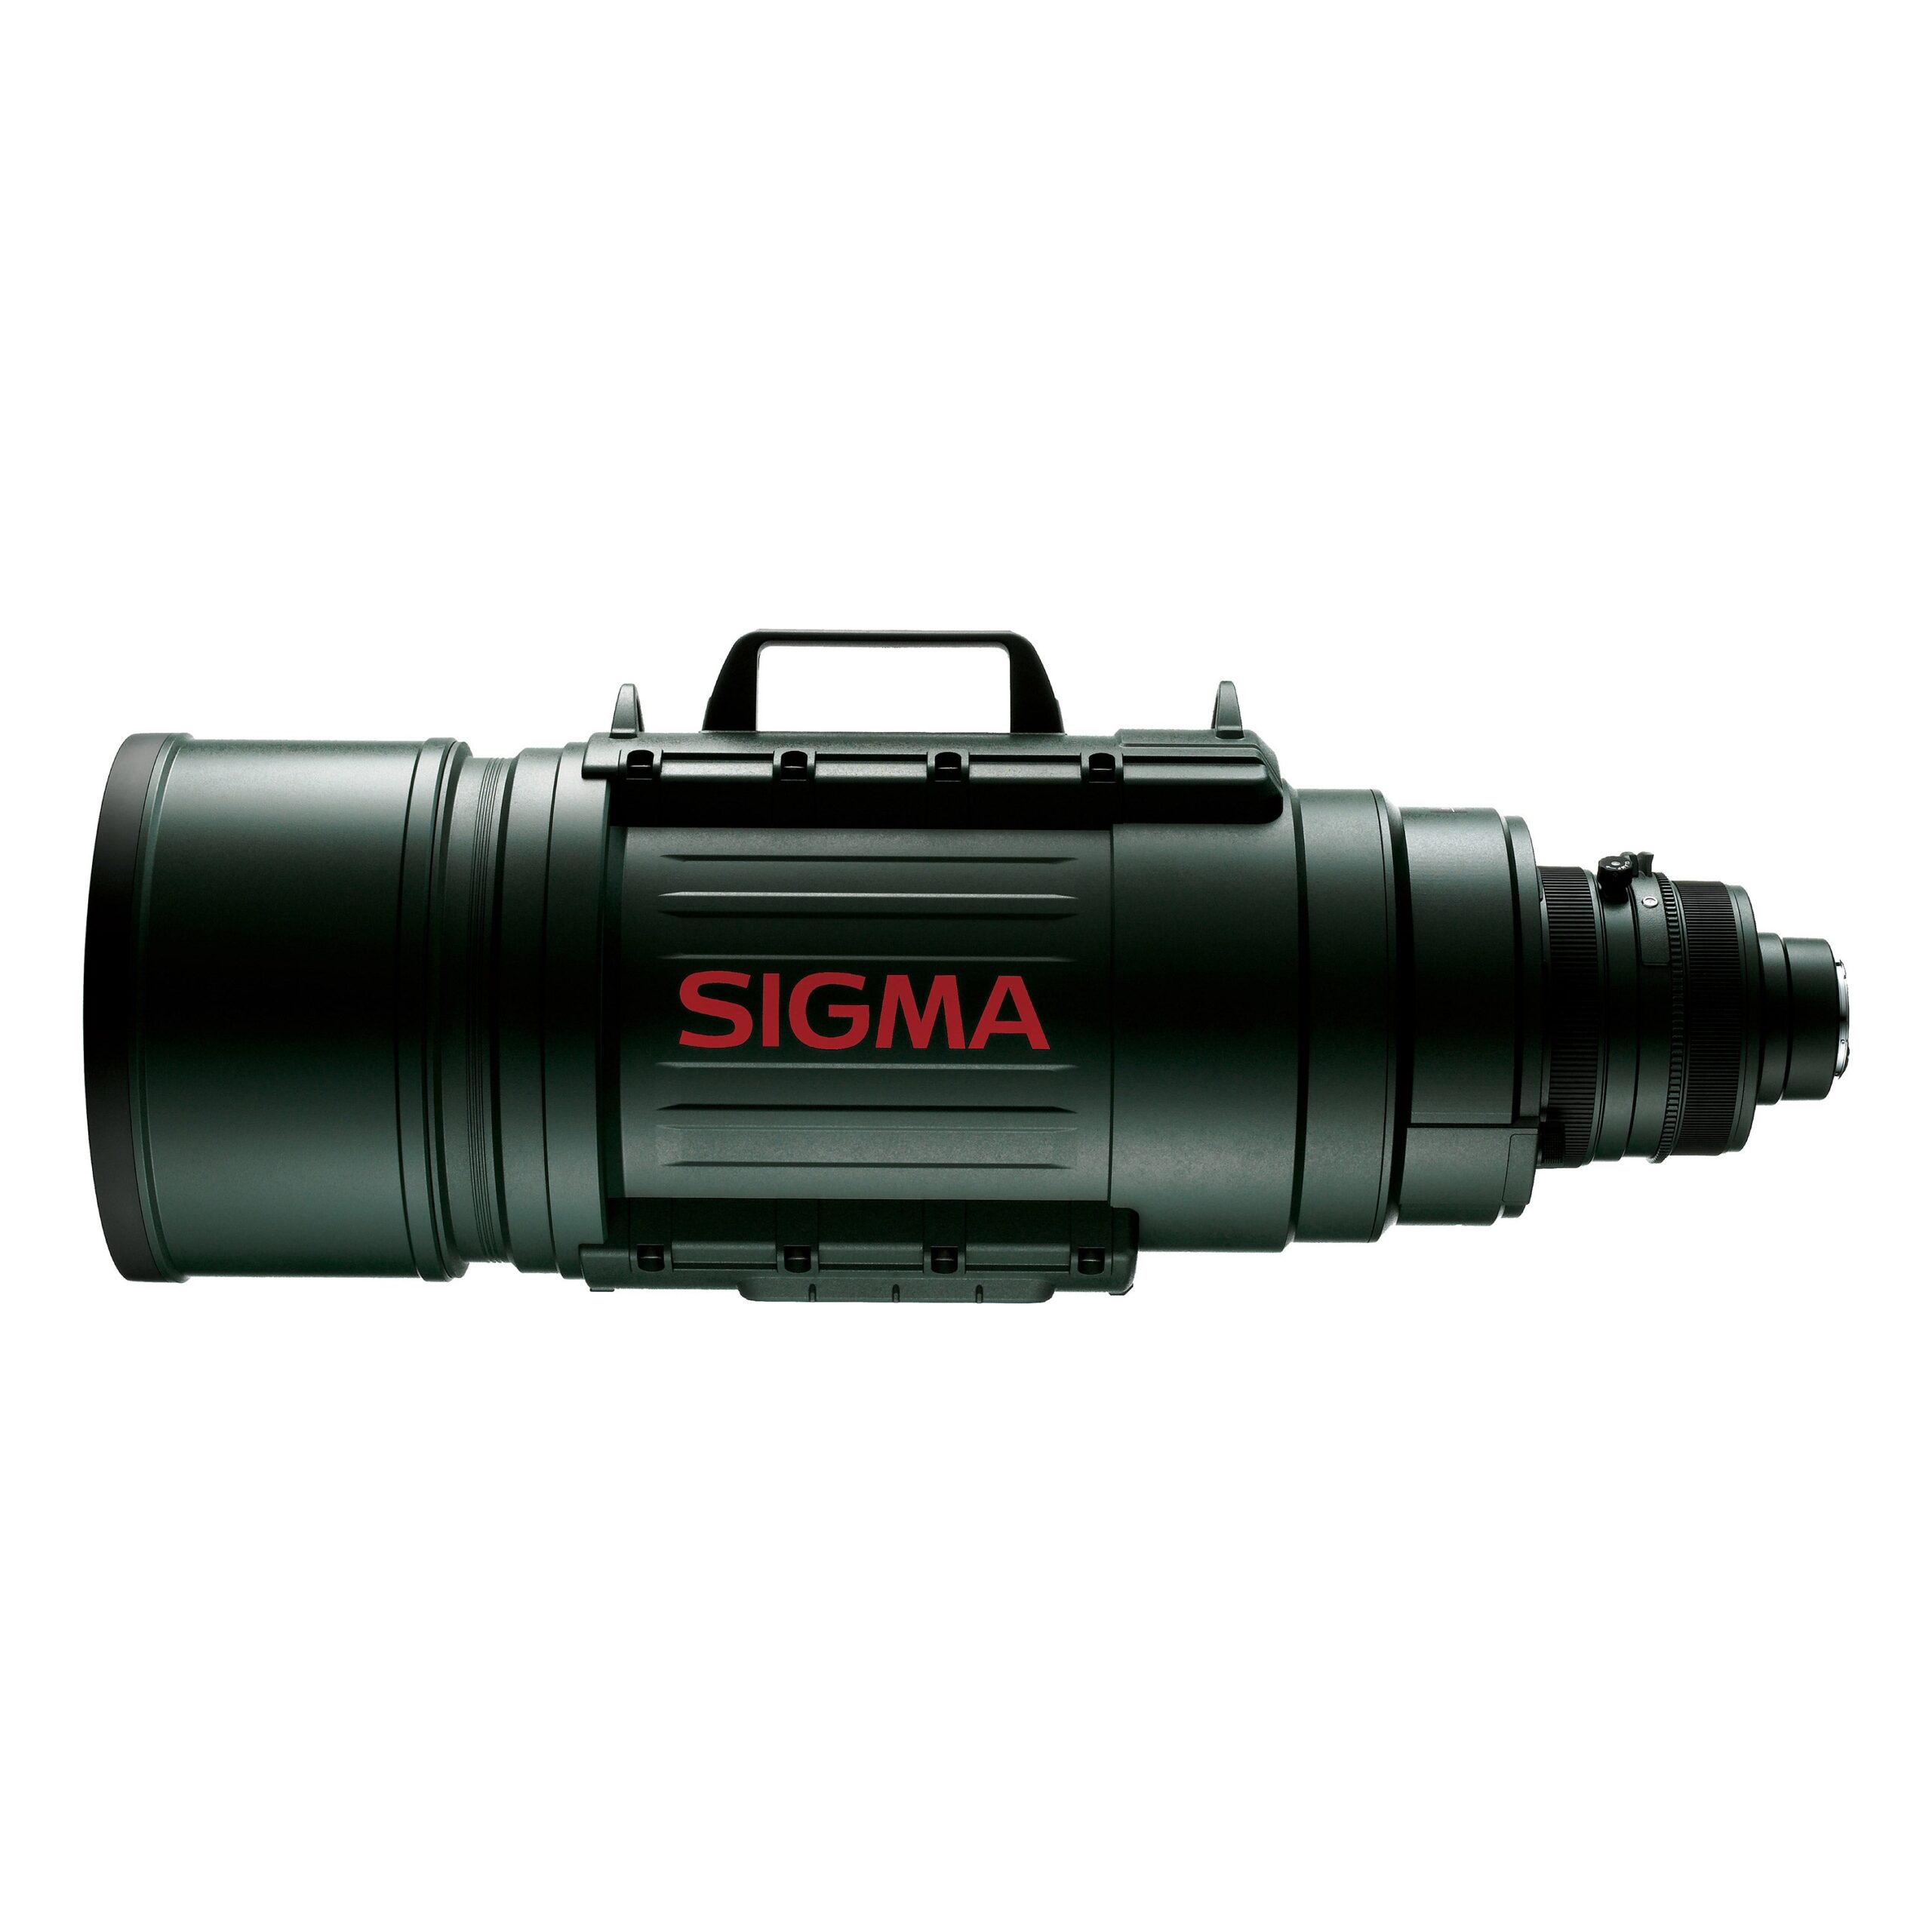 Сигма брал. Sigma 1000mm f8 apo. Sigma 200-500mm f/2.8 apo ex DG. Sigma 200-500 mm f2.8. Sigma af 200-500mm f/2.8.